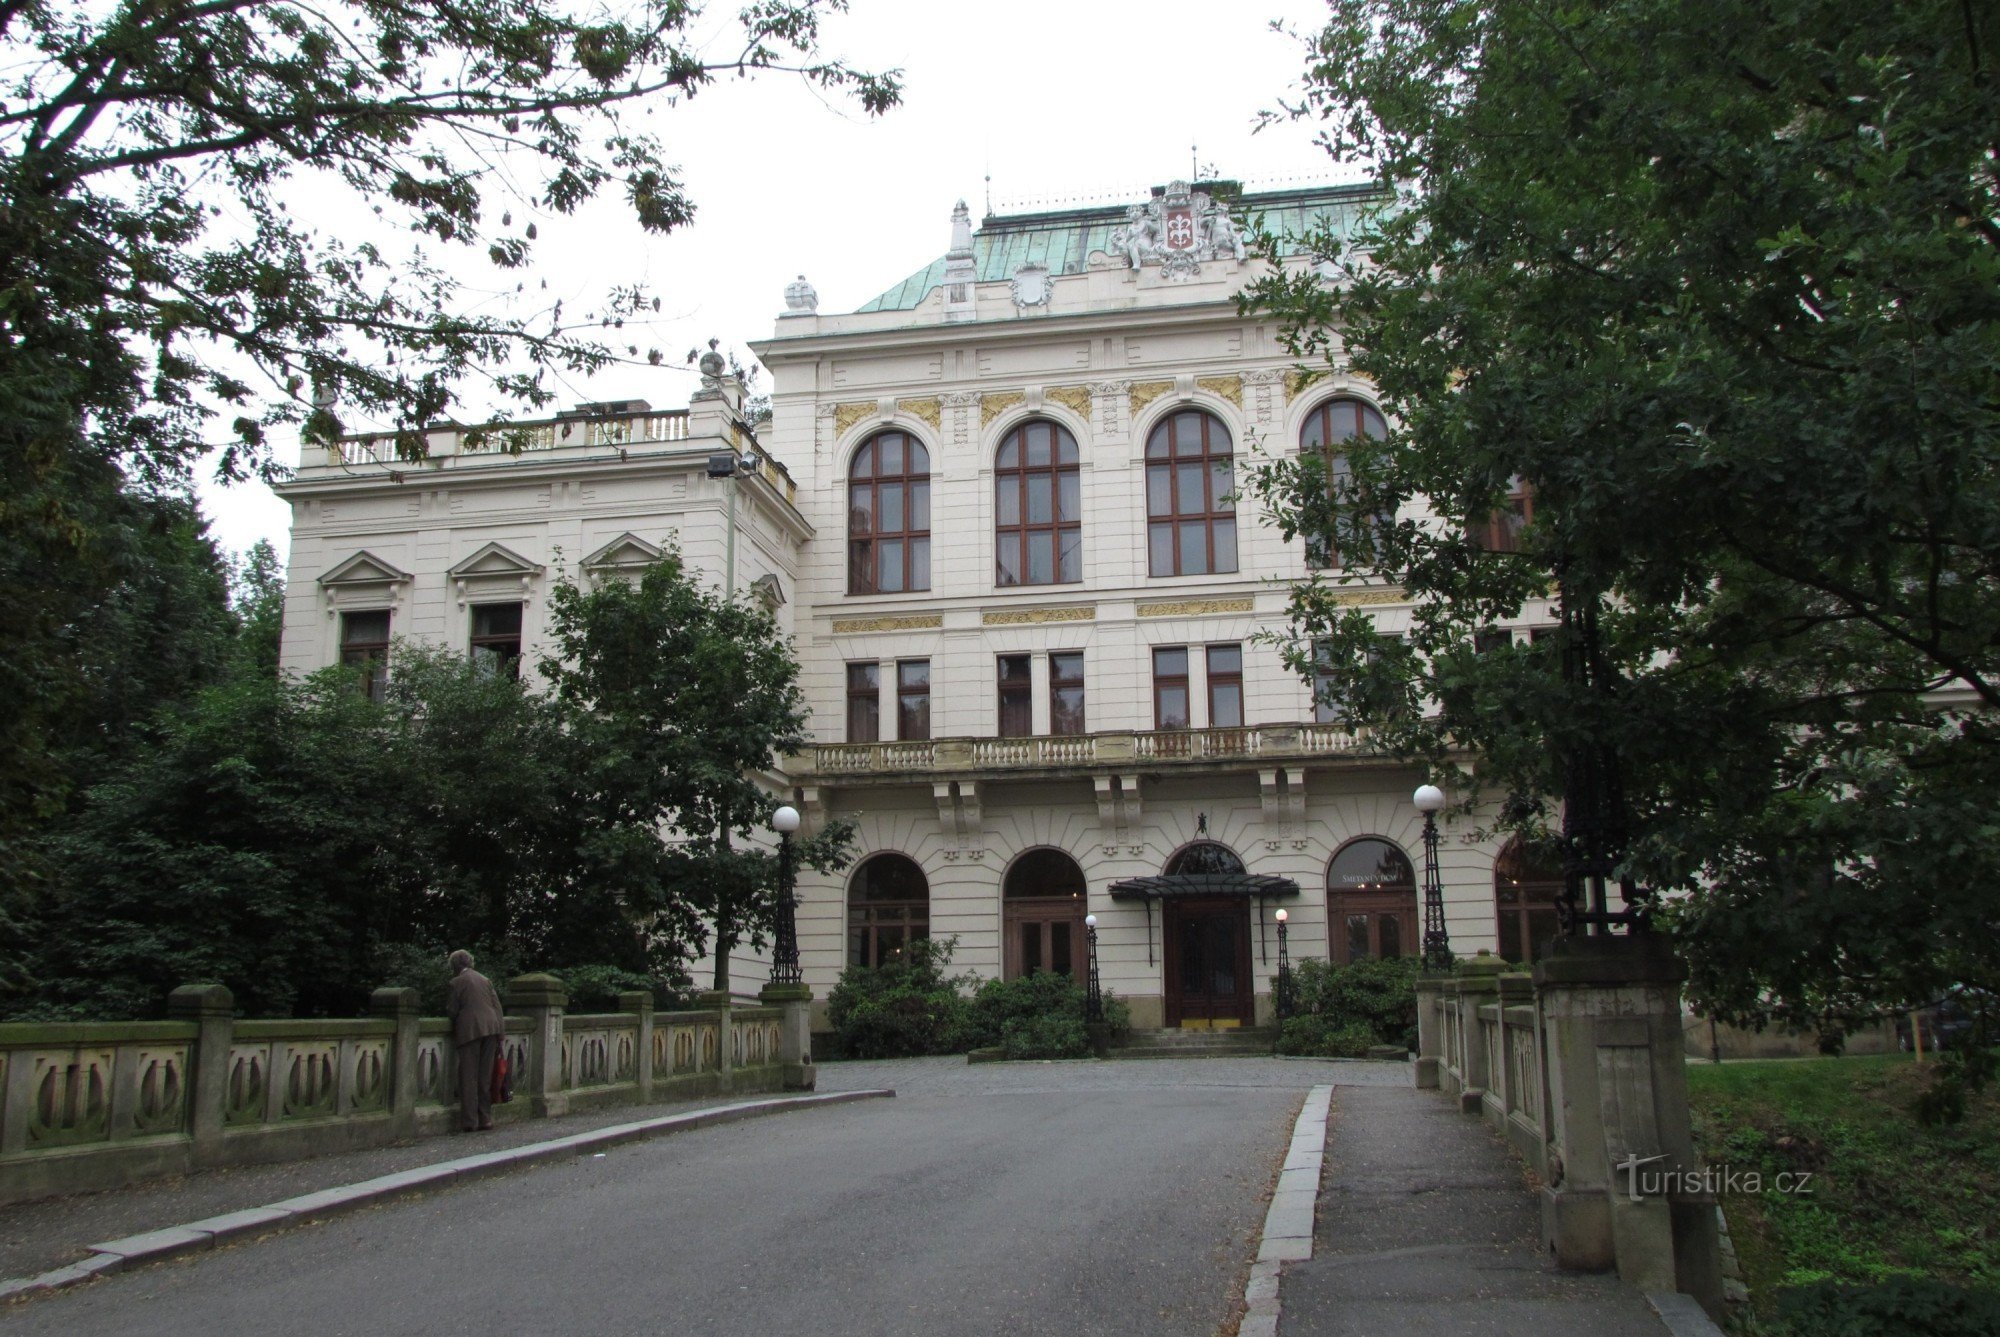 Smetana's house